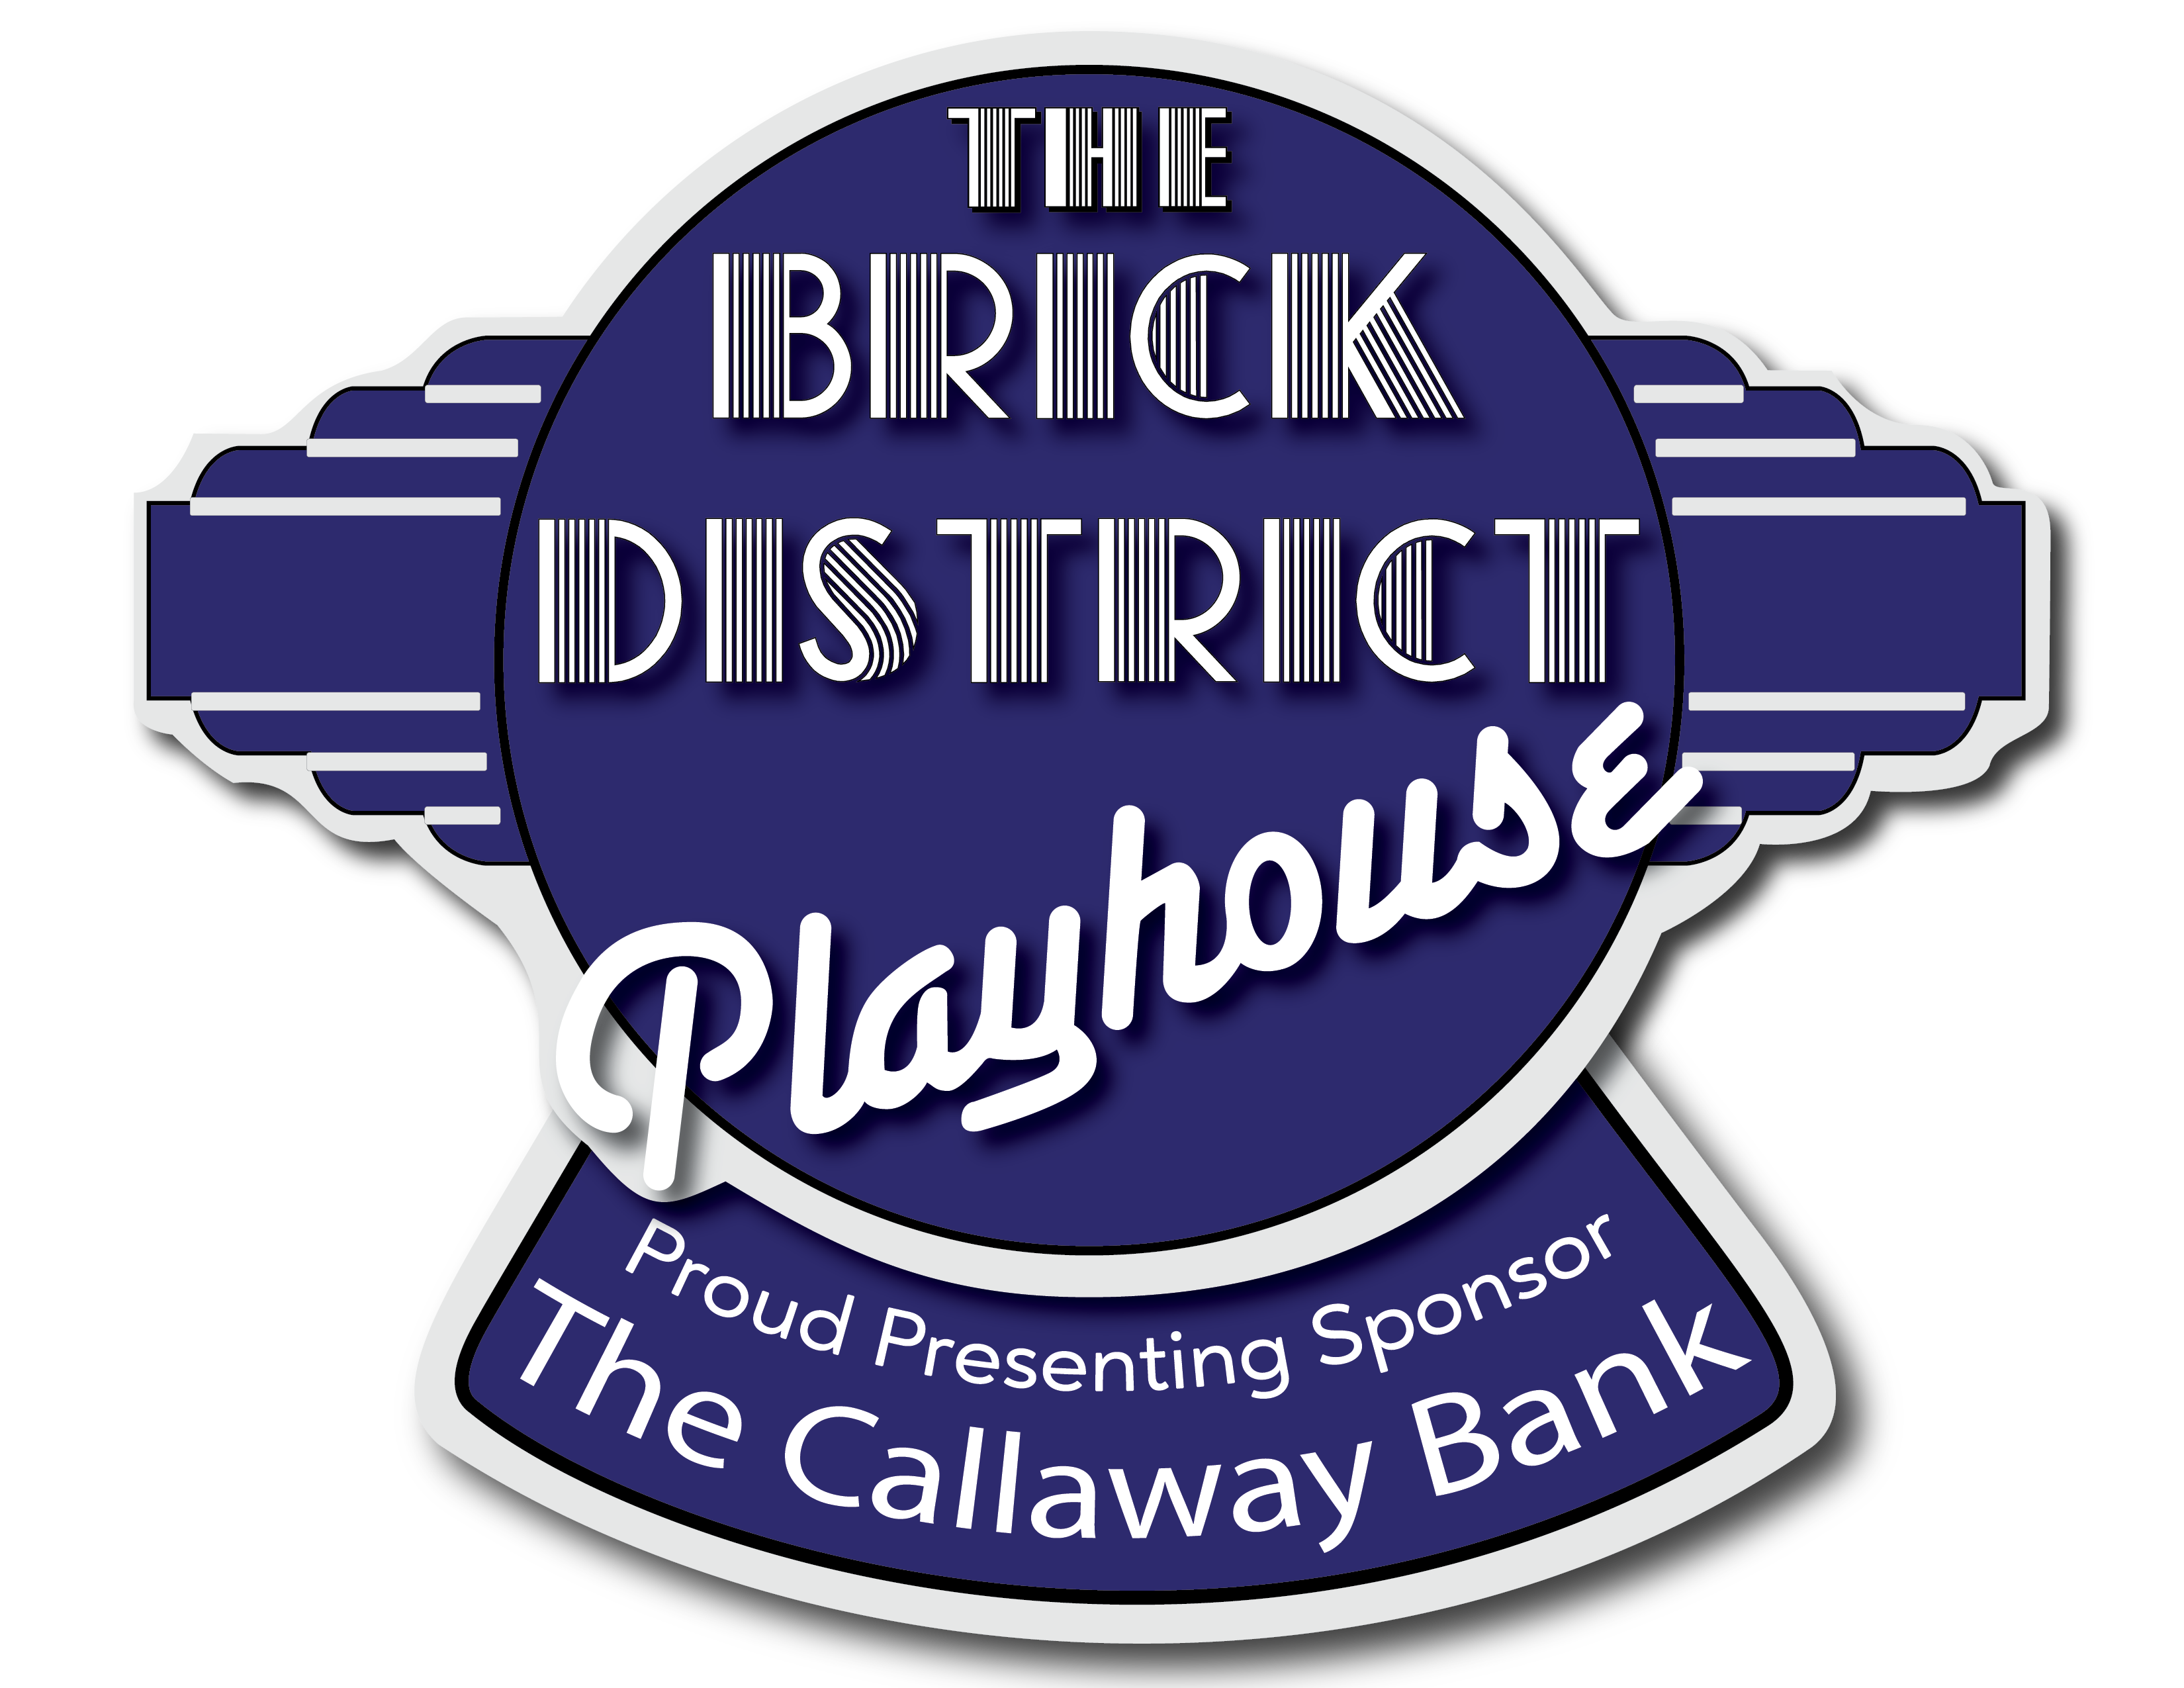 The Brick District Playhouse